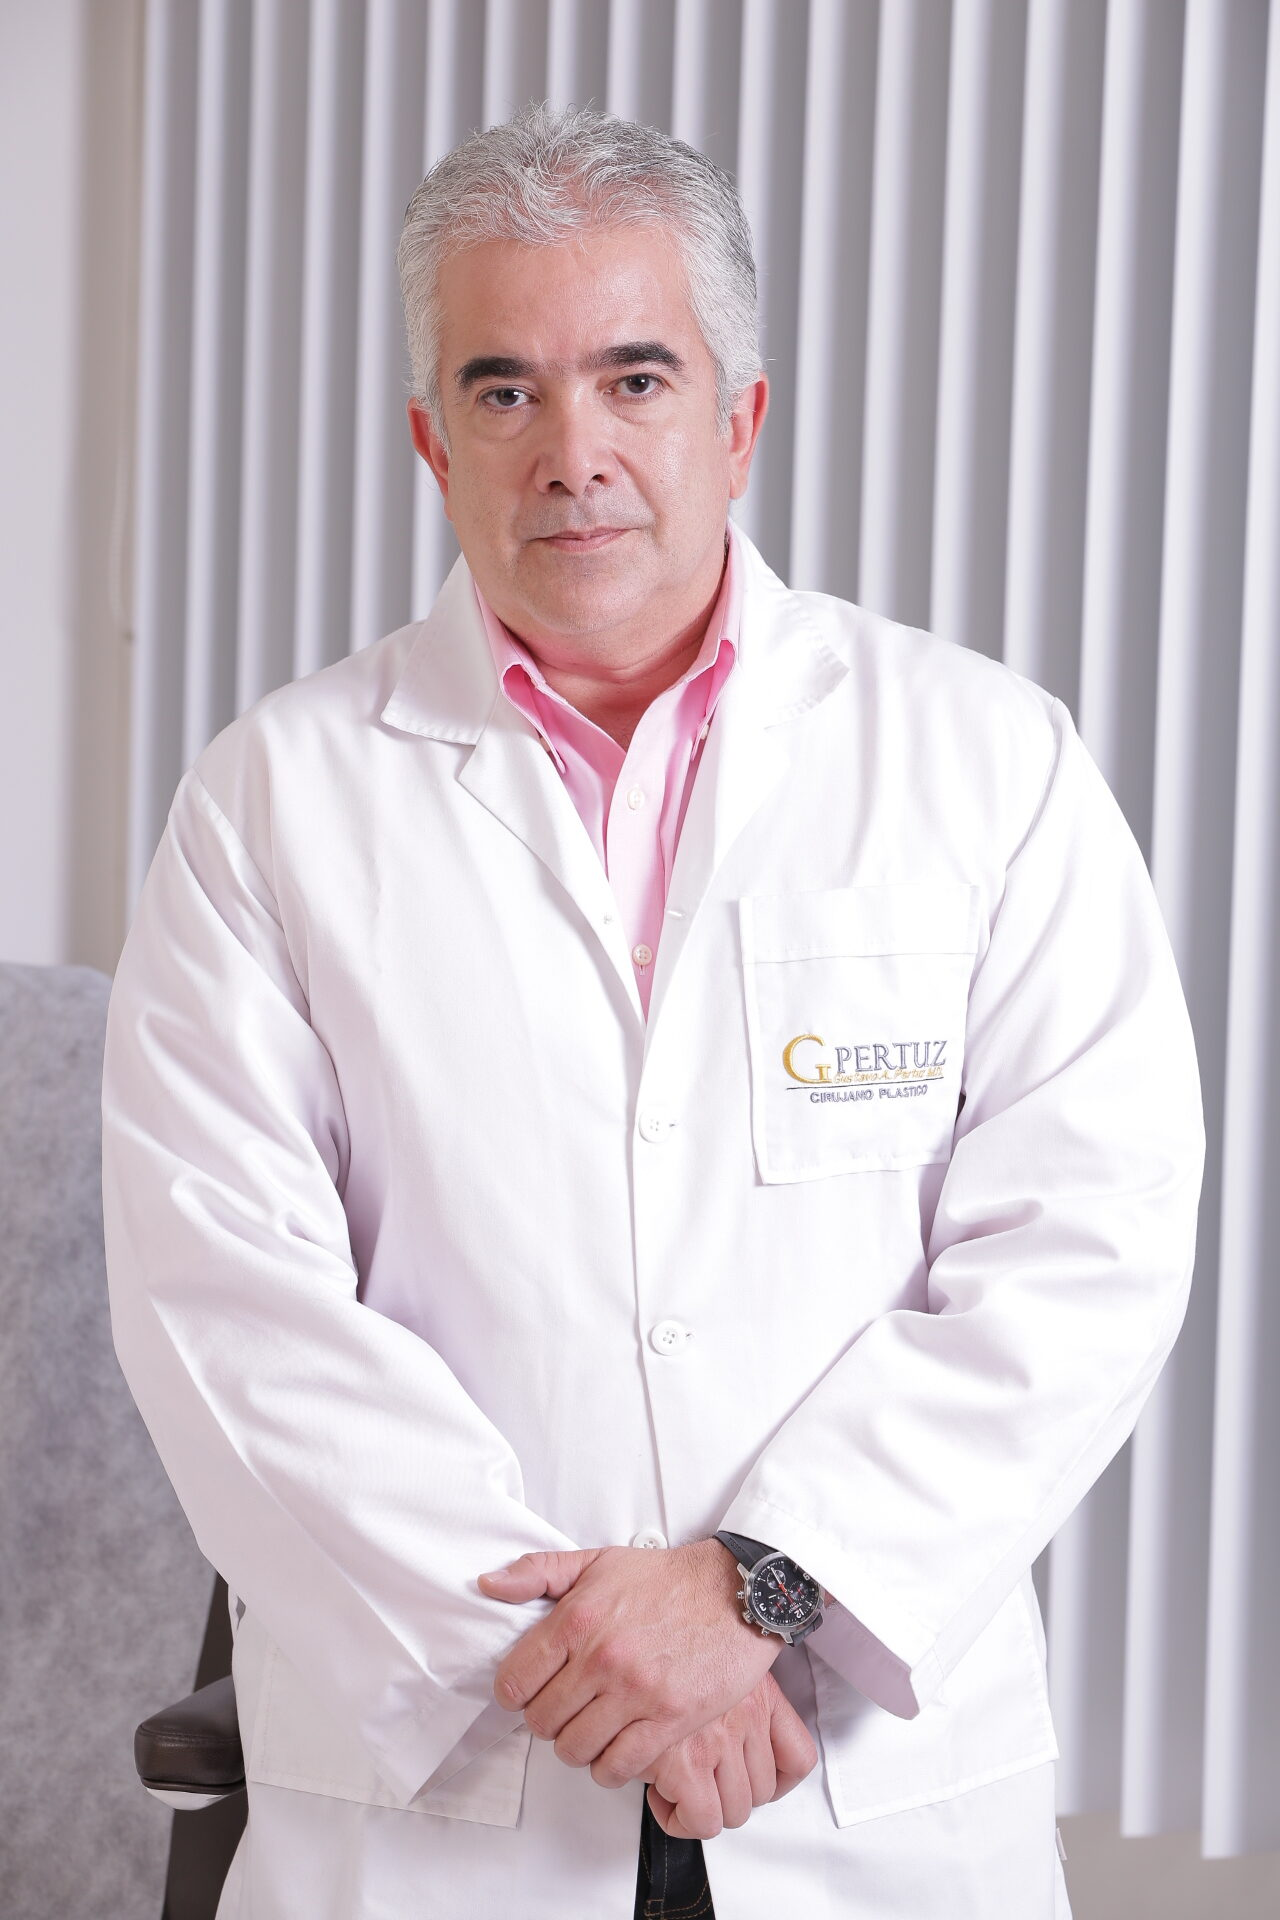 Doctor Gustavo Pertuz